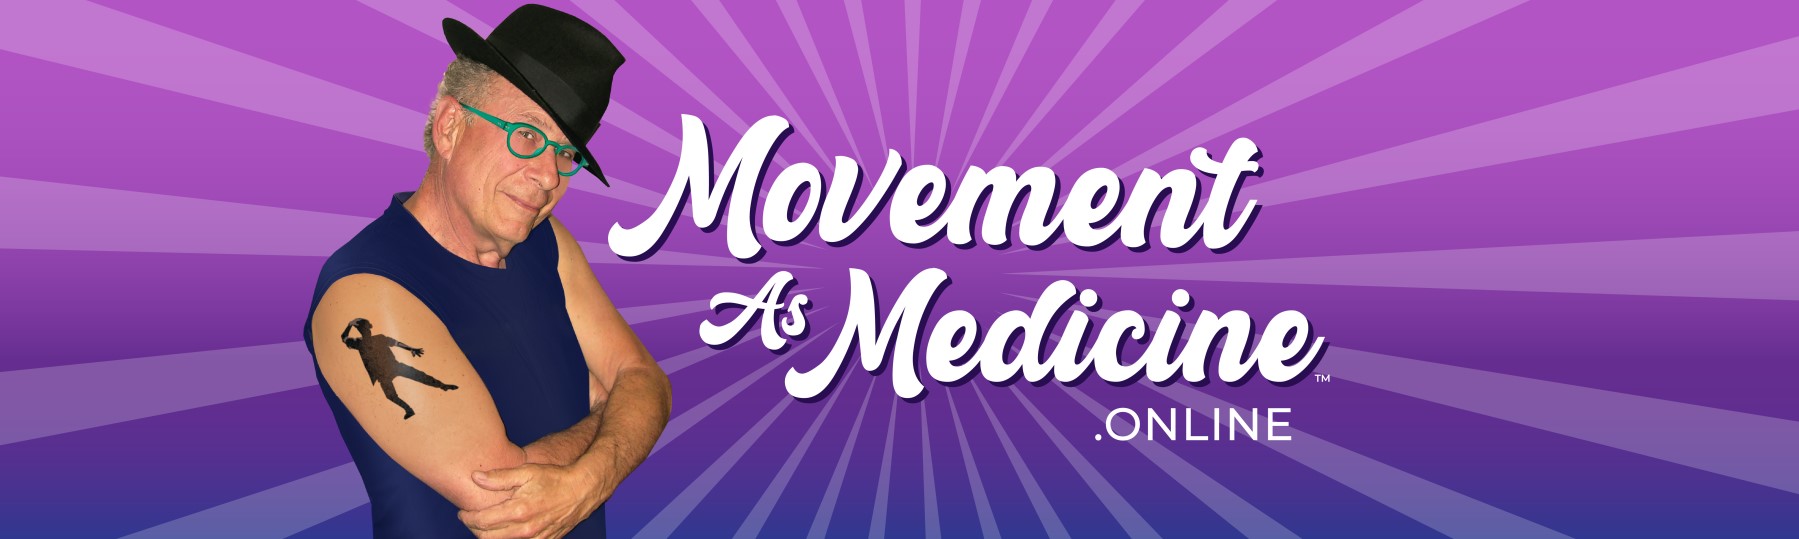 Movement As Medicine.online